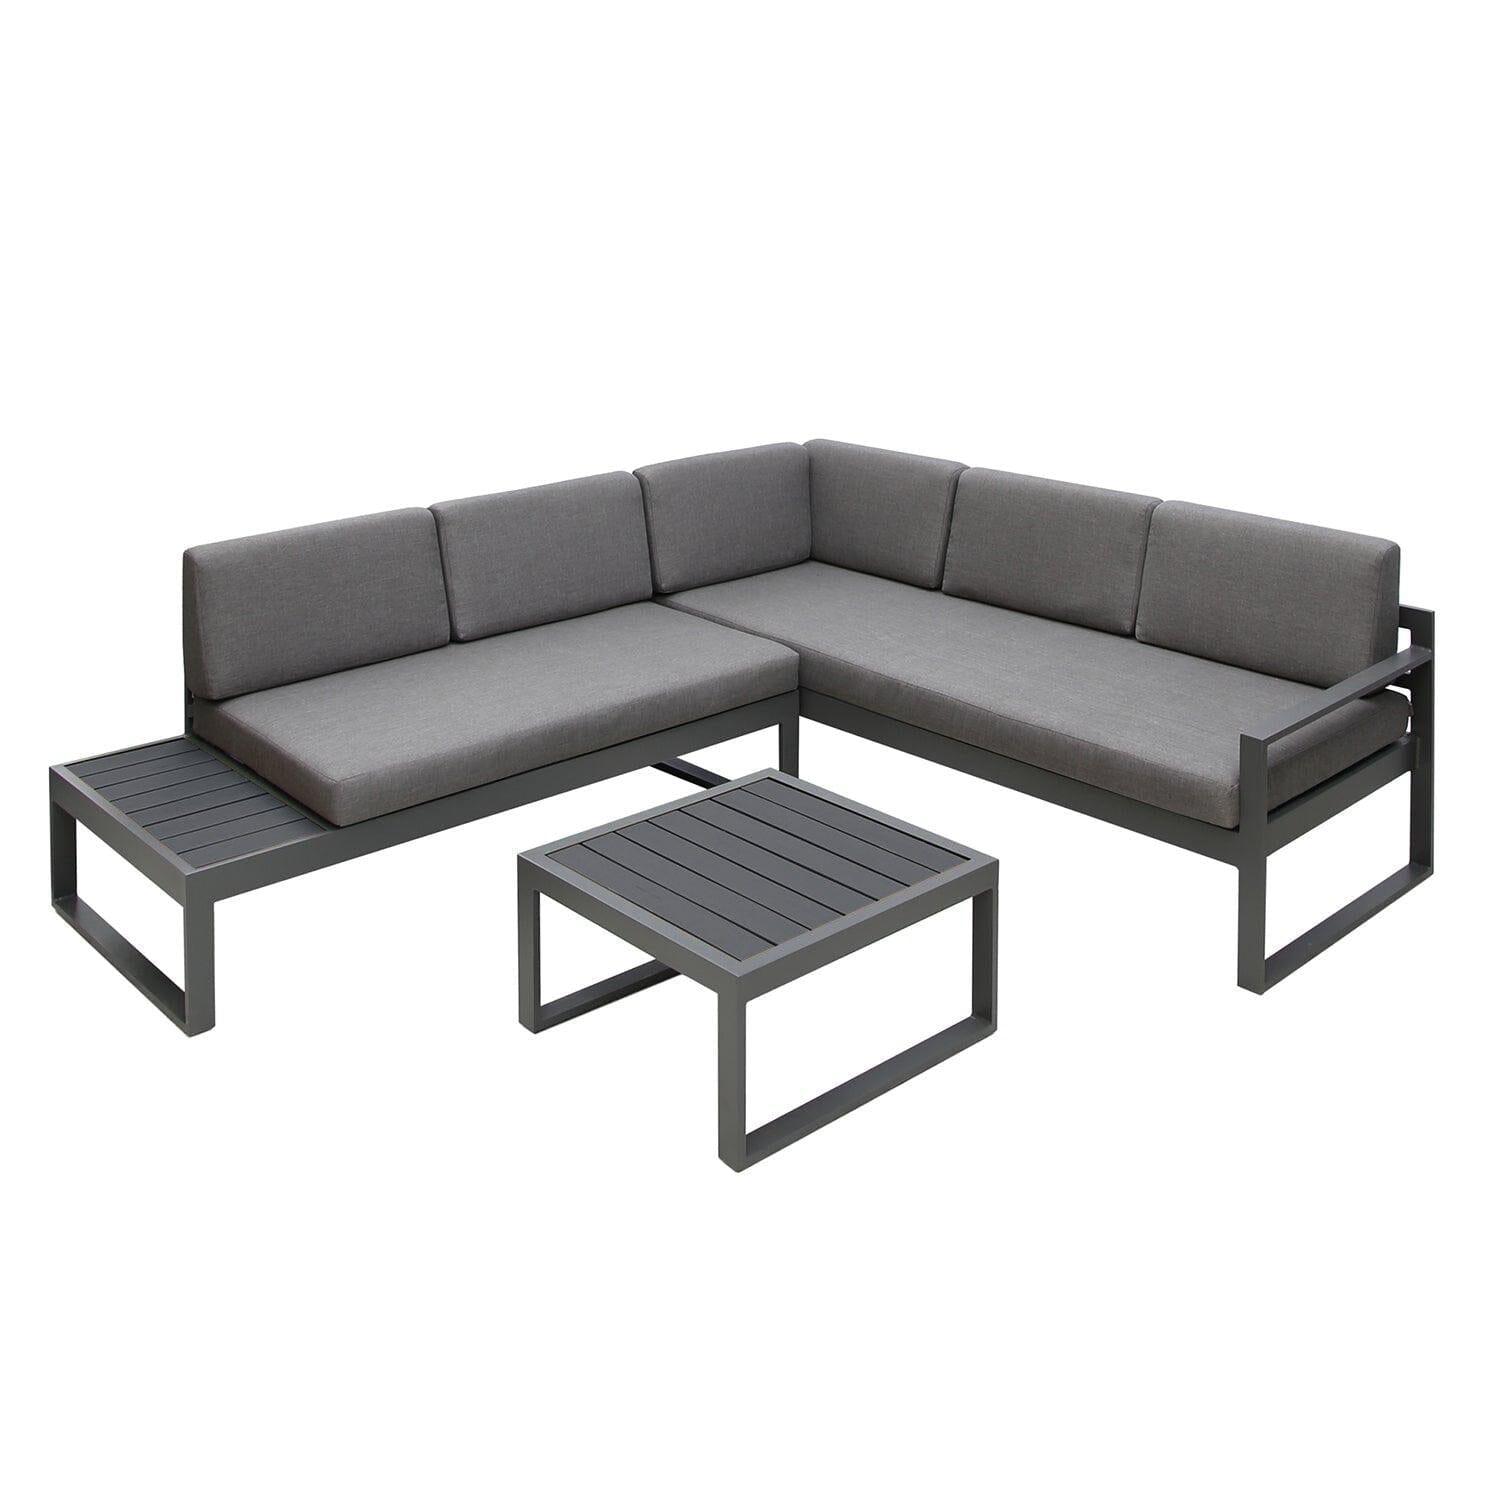 Maia 5 Seater Garden Interchangeable Sofa Set with Grey Lean Over Parasol - Grey